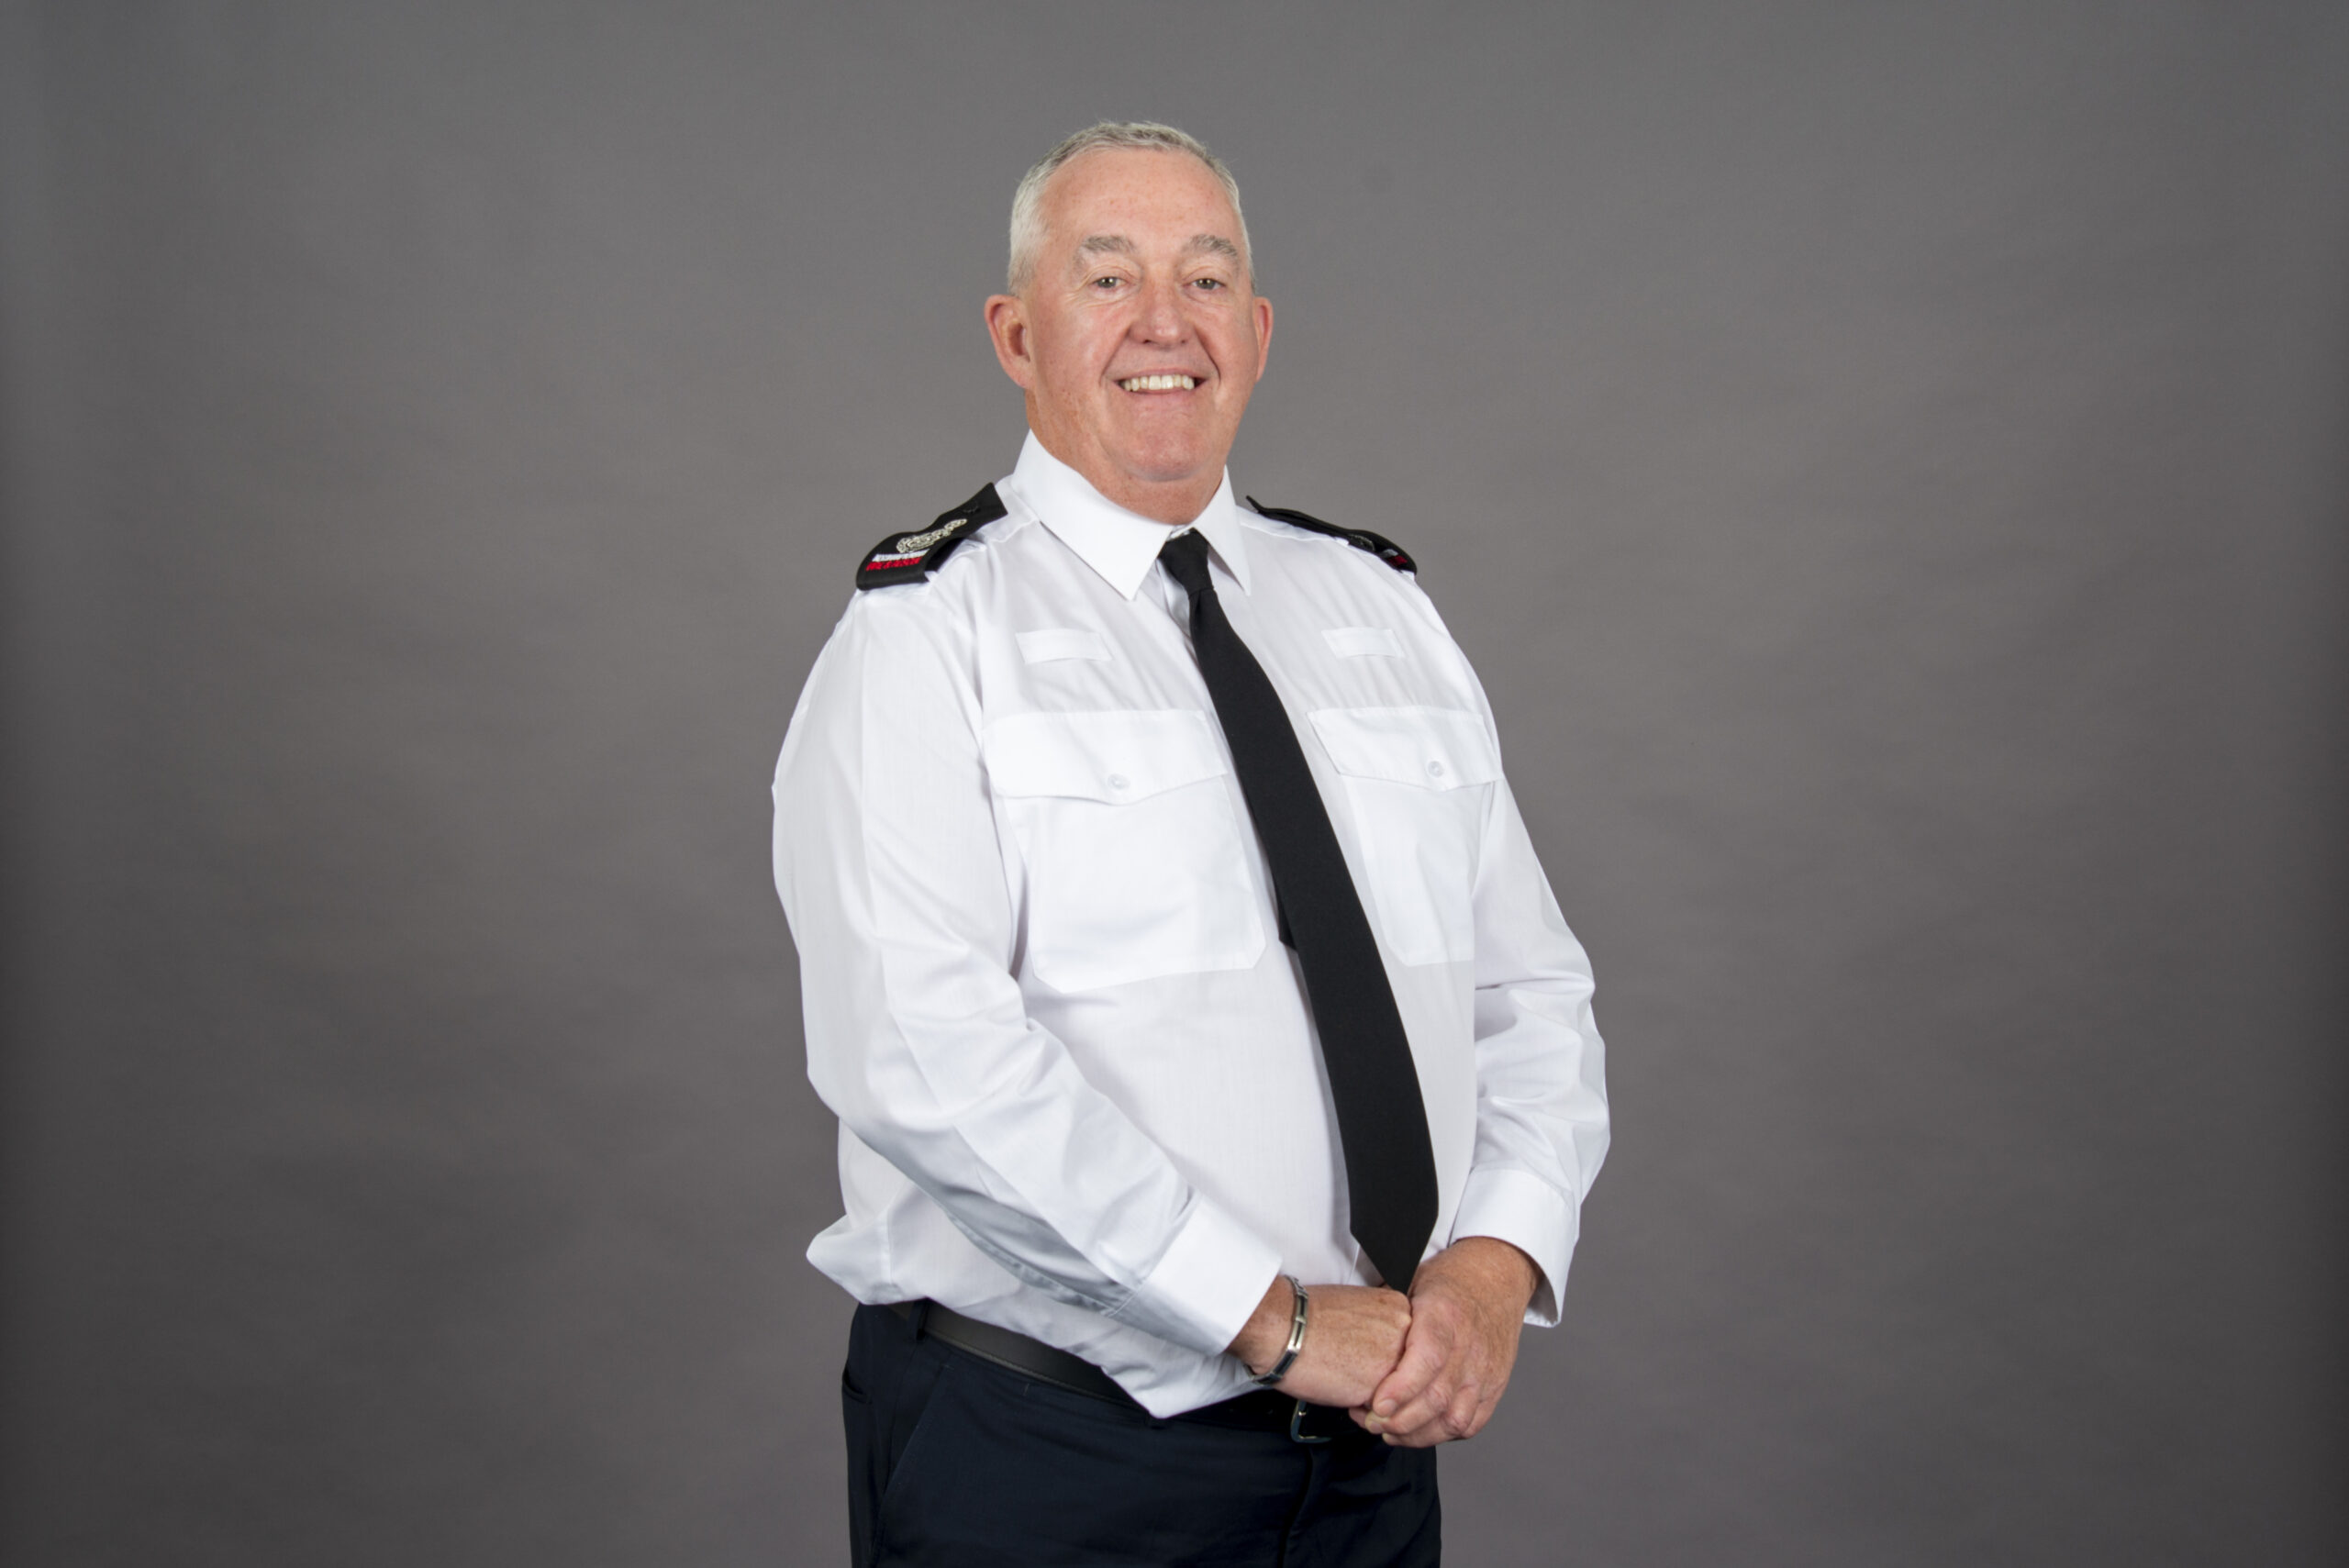 Chief Fire Officer Mark Jones